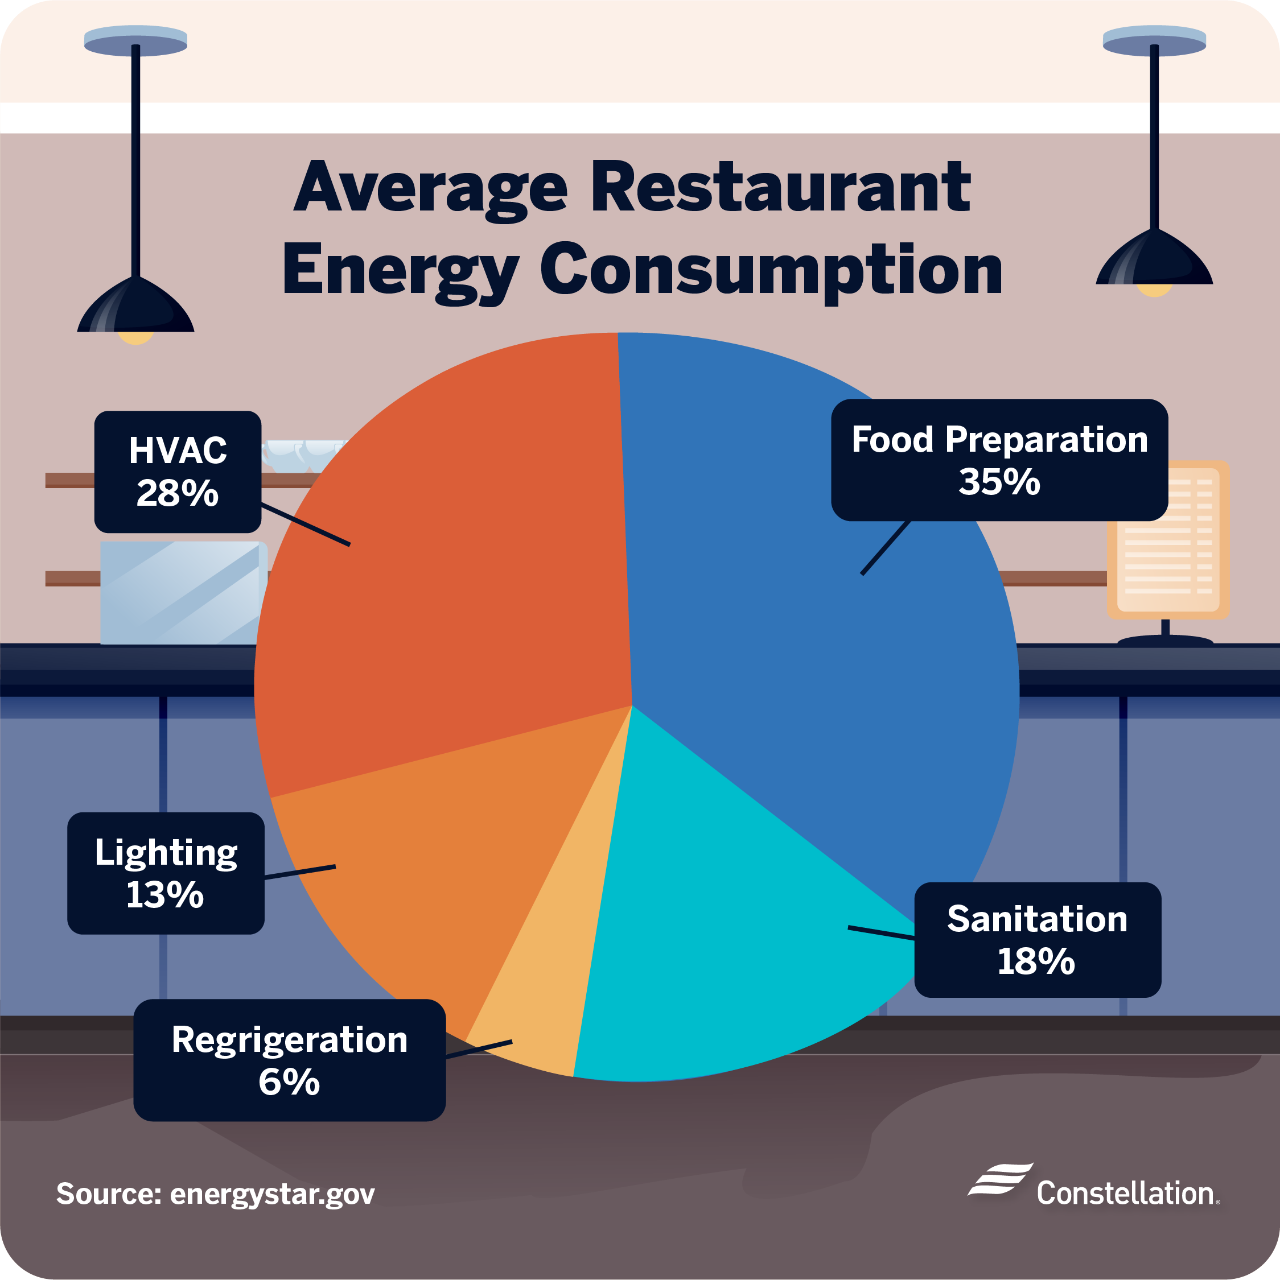 Average restaurant energy consumption in the US.